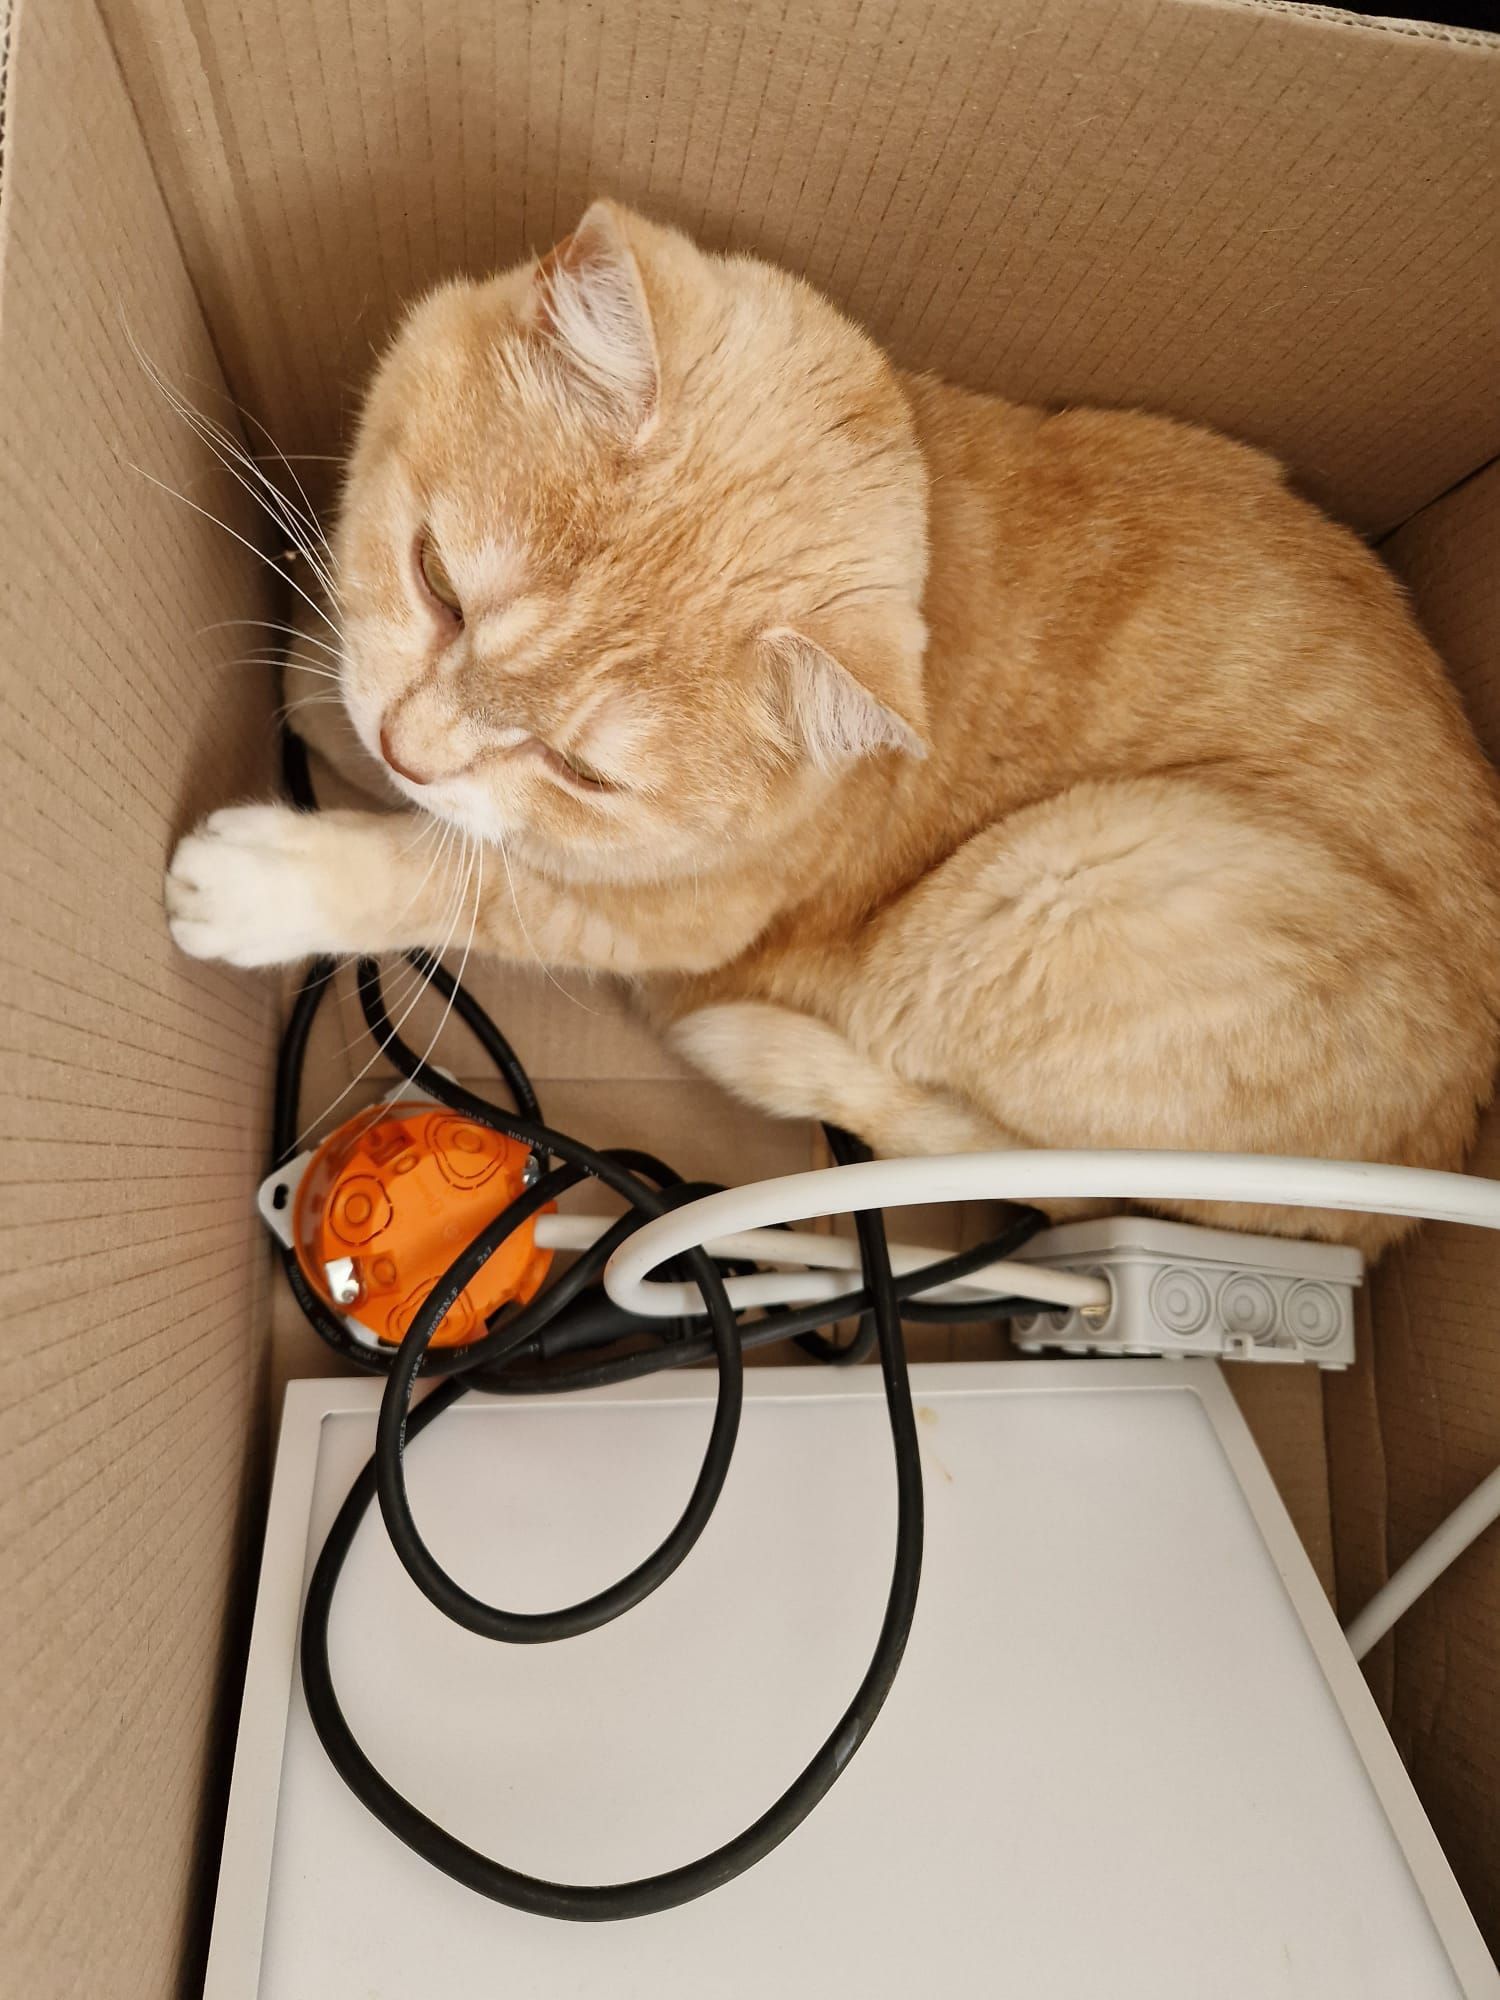 Elektrotechnik und Katze